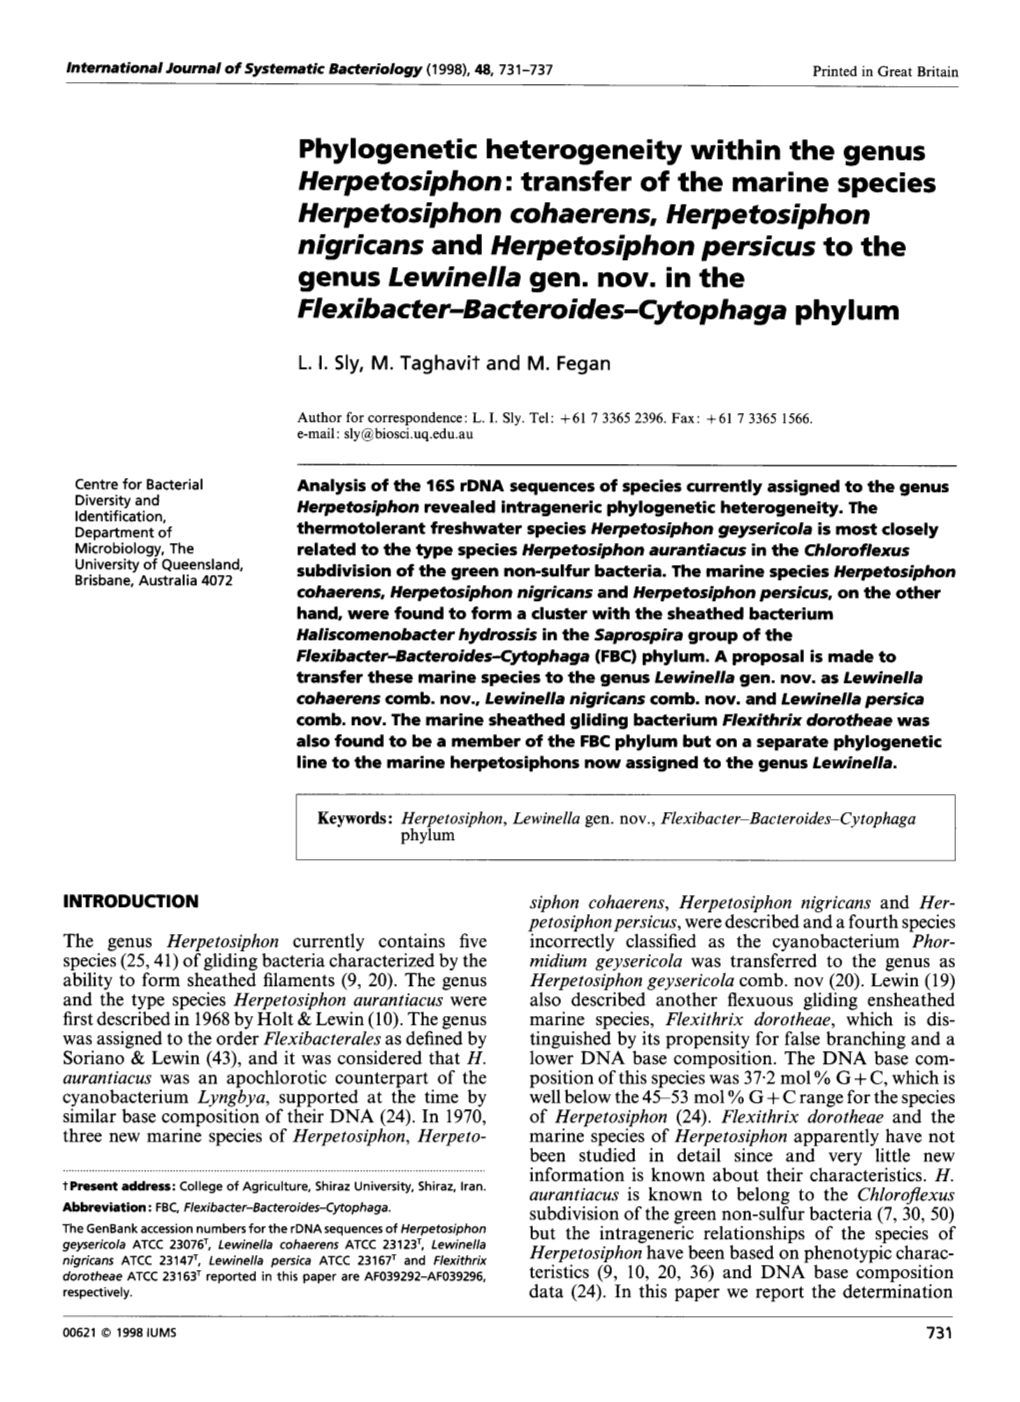 Phylogenetic Heterogeneity Within the Genus Herpetosiphon: Transfer Of